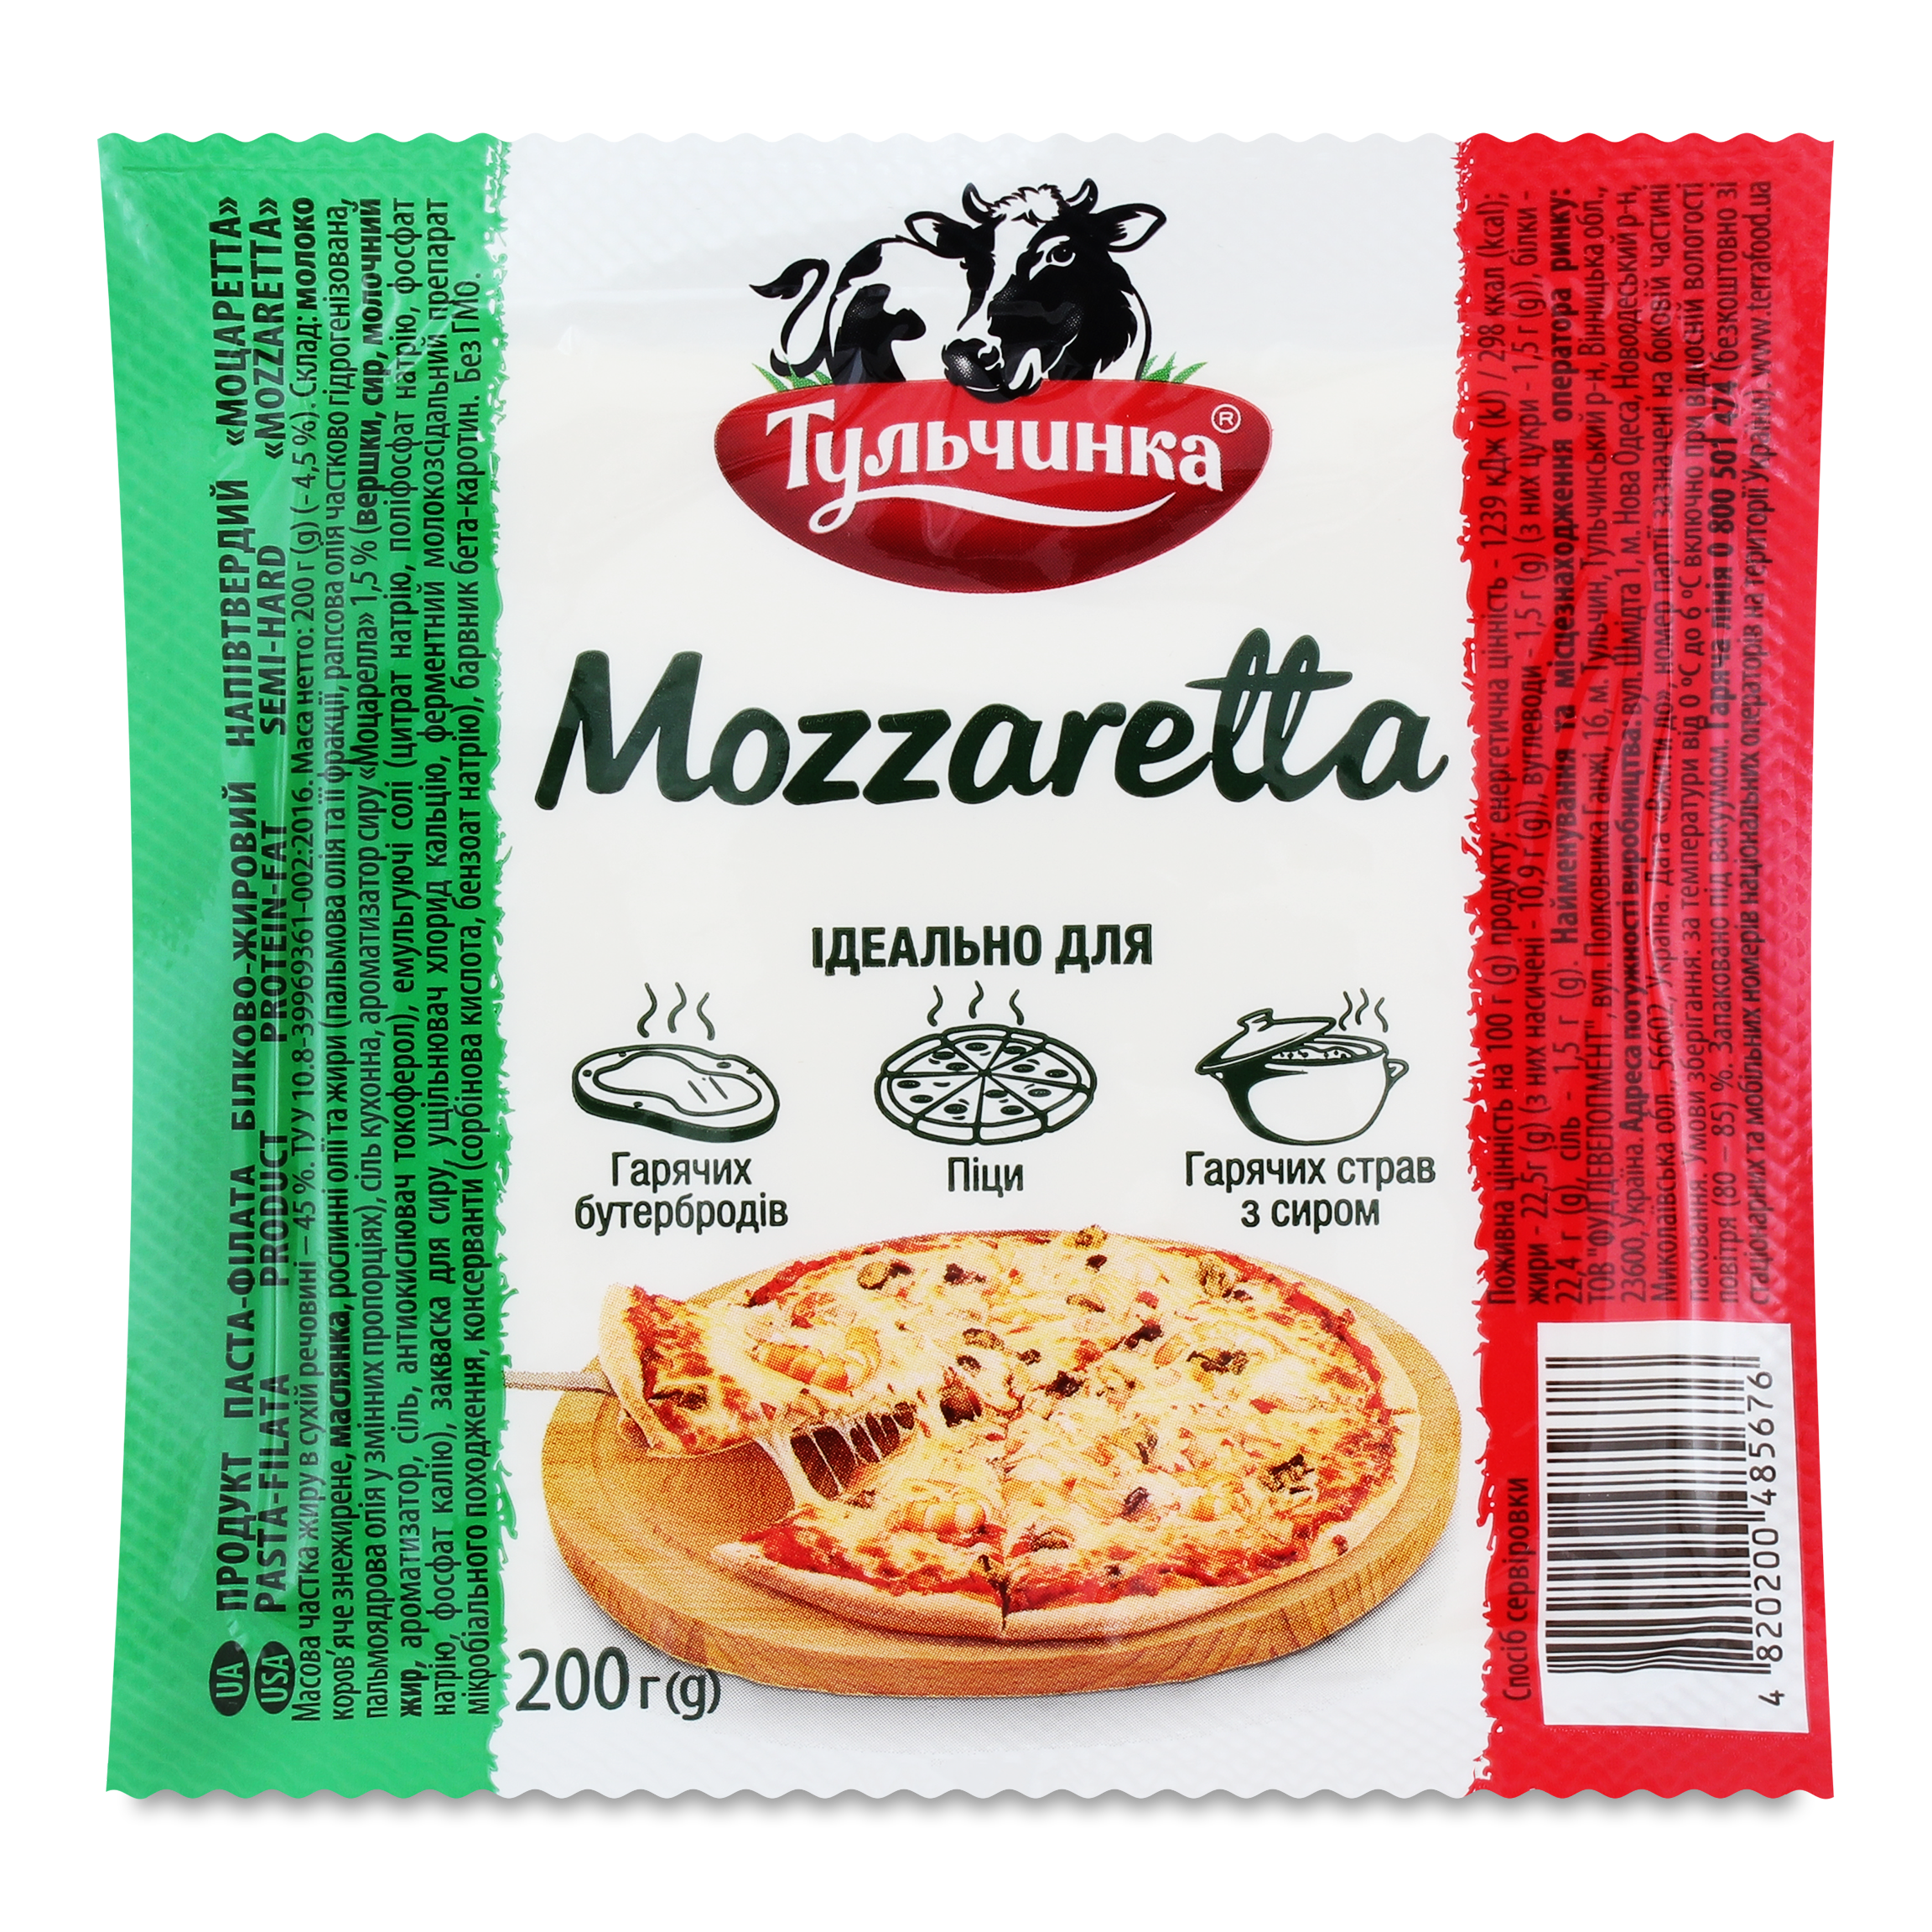 Tulchynka Mozzarette Product is pasta-filata 45% 200g